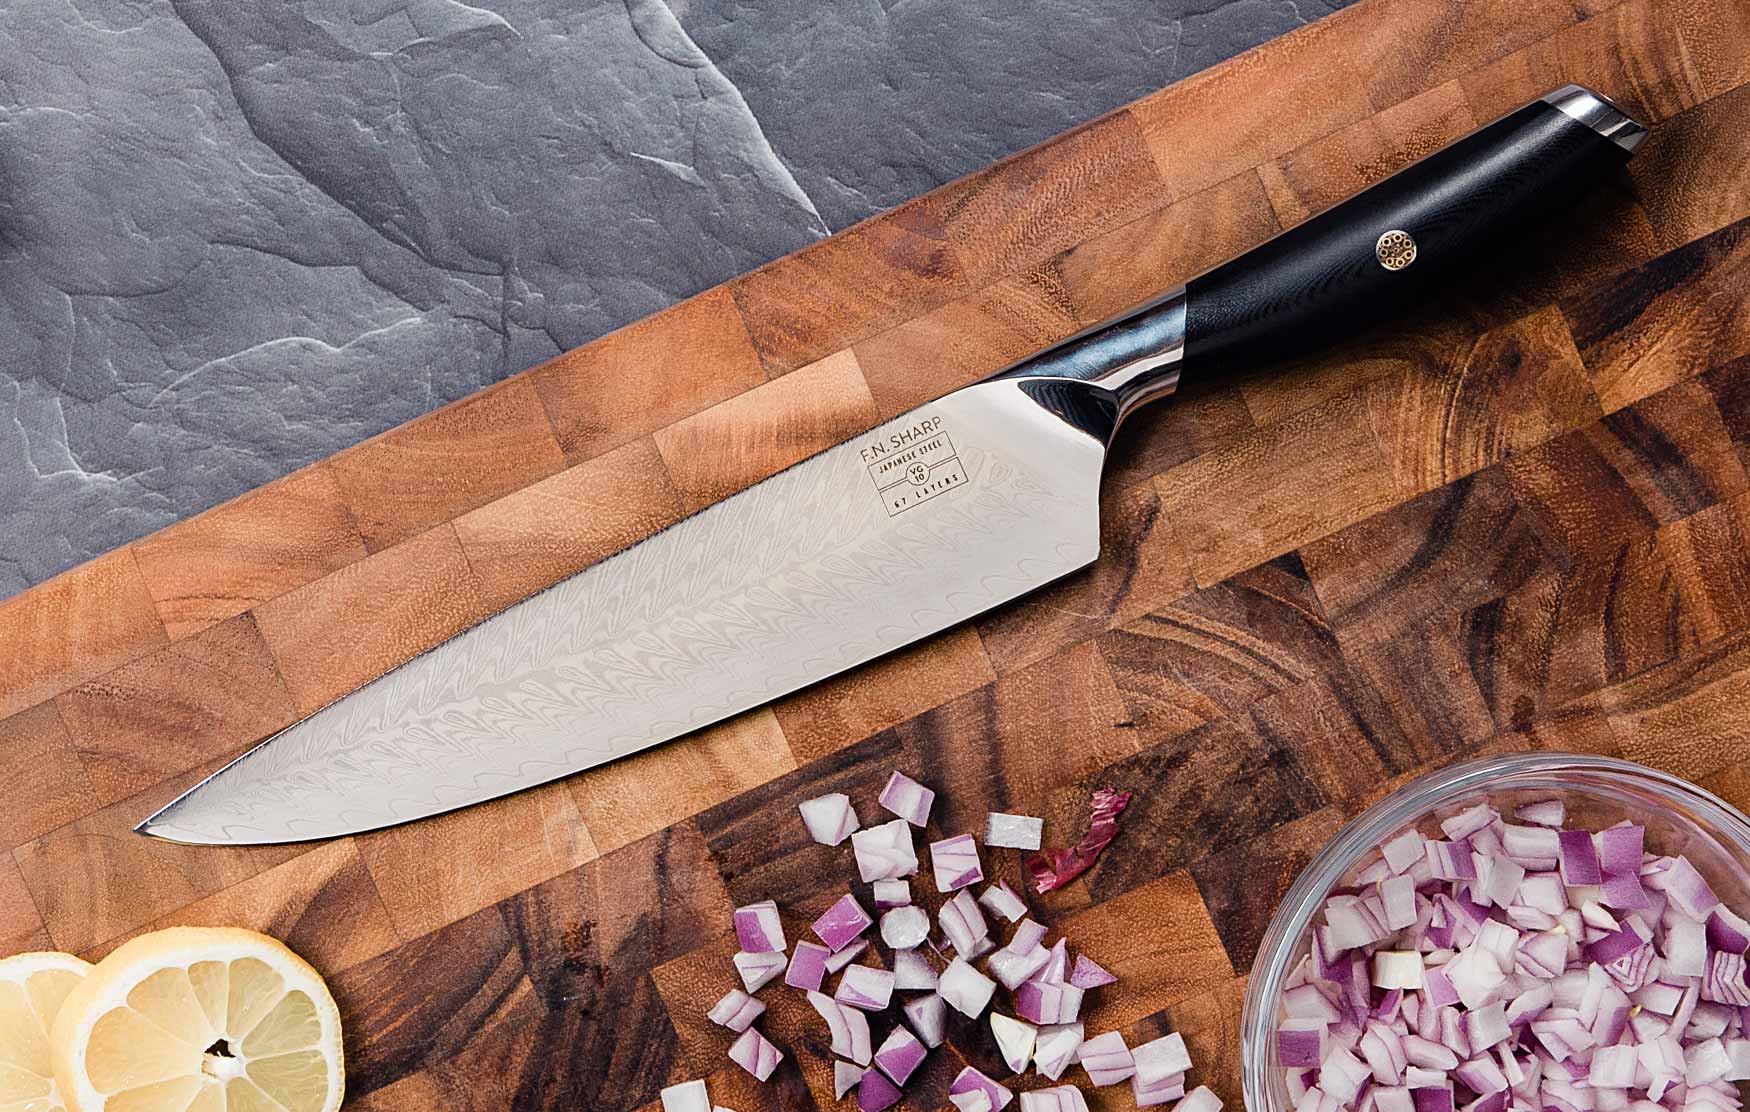 good kitchen knife design